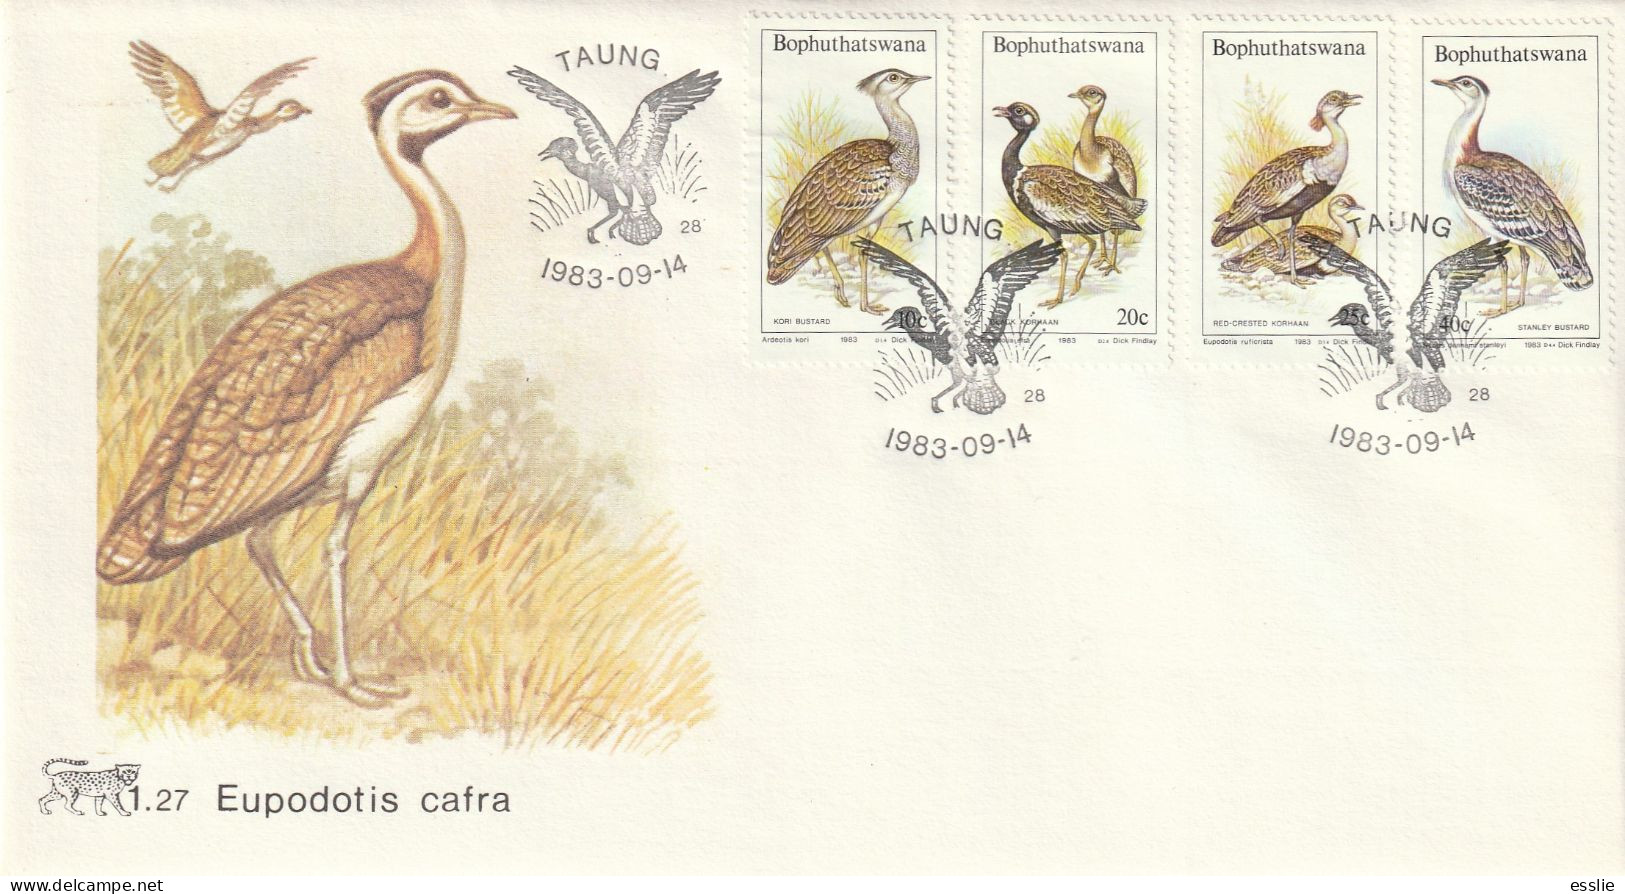 Bophuthatswana - 1983 - Birds Vogel Of The Veld Bustards - First Day Cover - Small - Grues Et Gruiformes